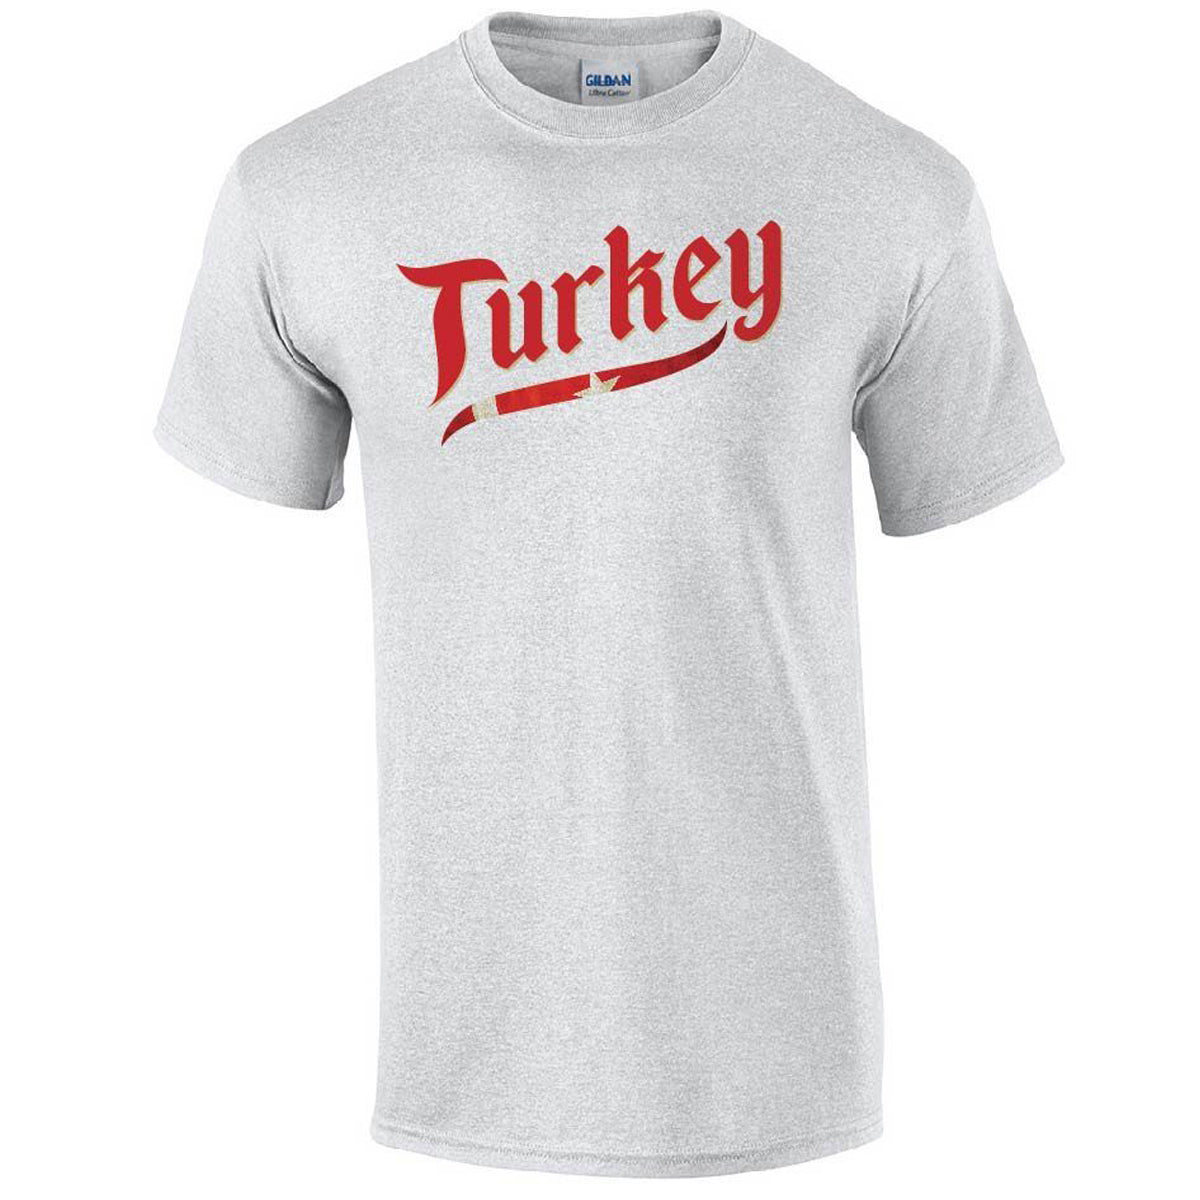 Turkey Script Euro 2016 Printed Tee T-shirts 411 Youth Medium Ash Youth